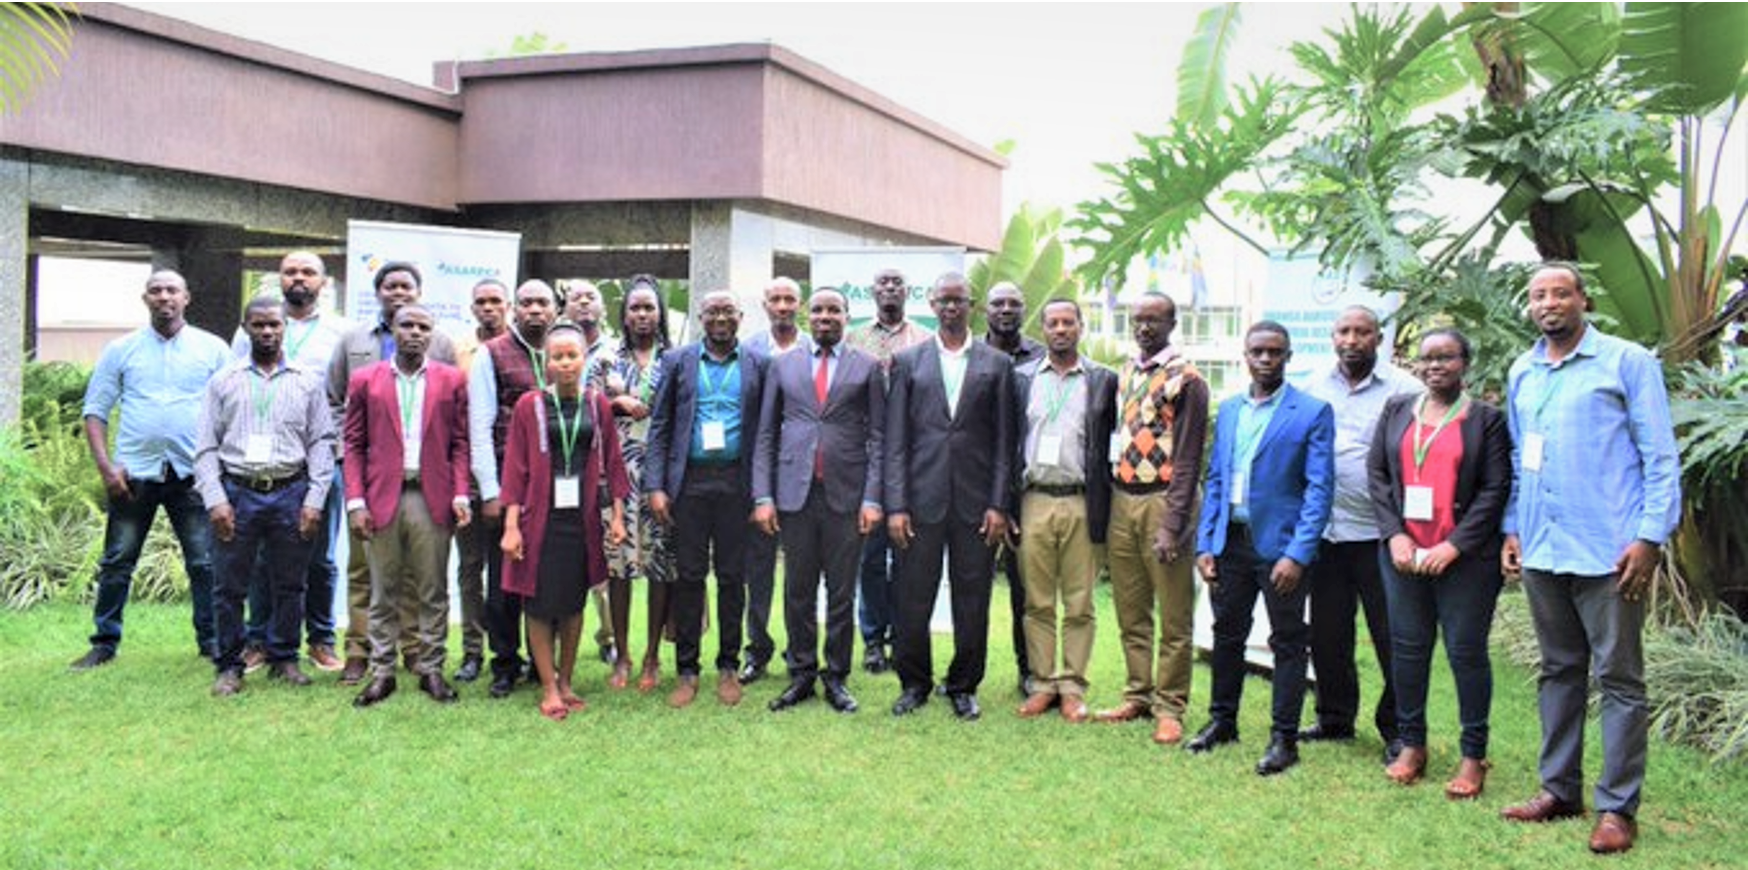 Participants at the Rwanda consultation session